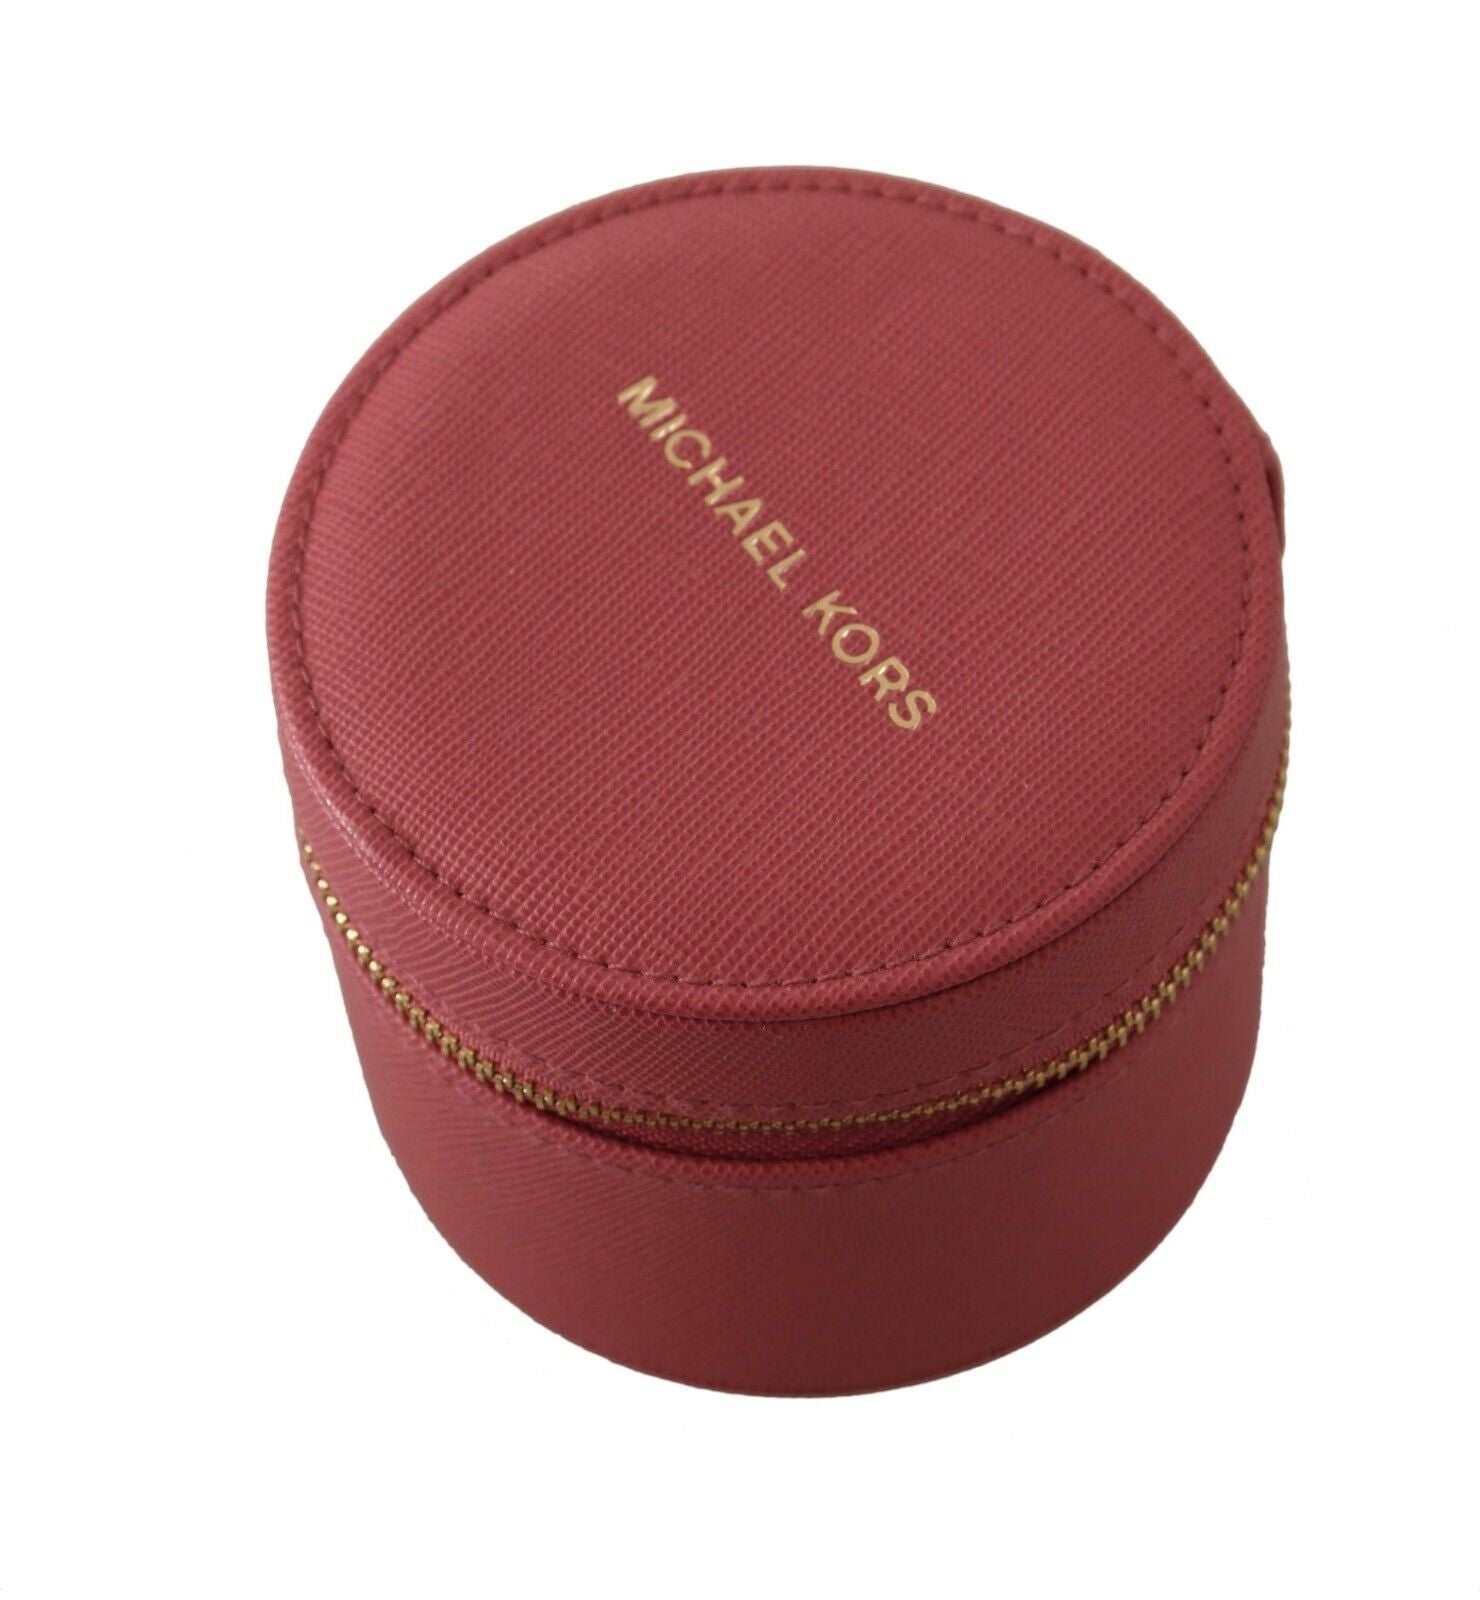 Michael Kors Pink Leather Zip Round Pouch Purse Storage Wallet - Fizigo